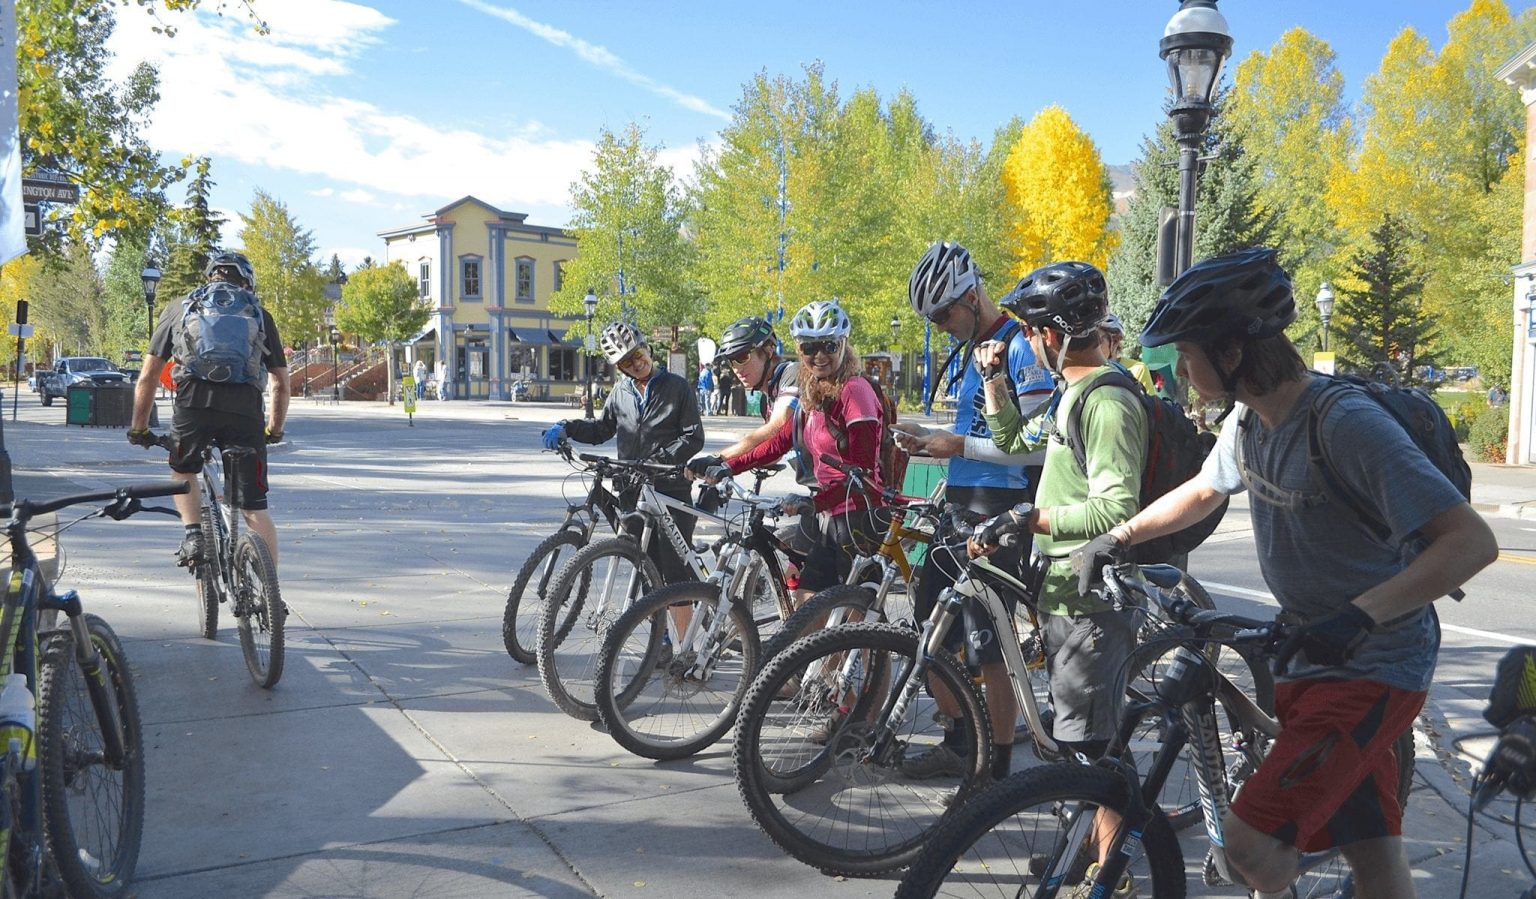 Group biking on Main Street at Camp 9600 in Breckenridge, Colorado